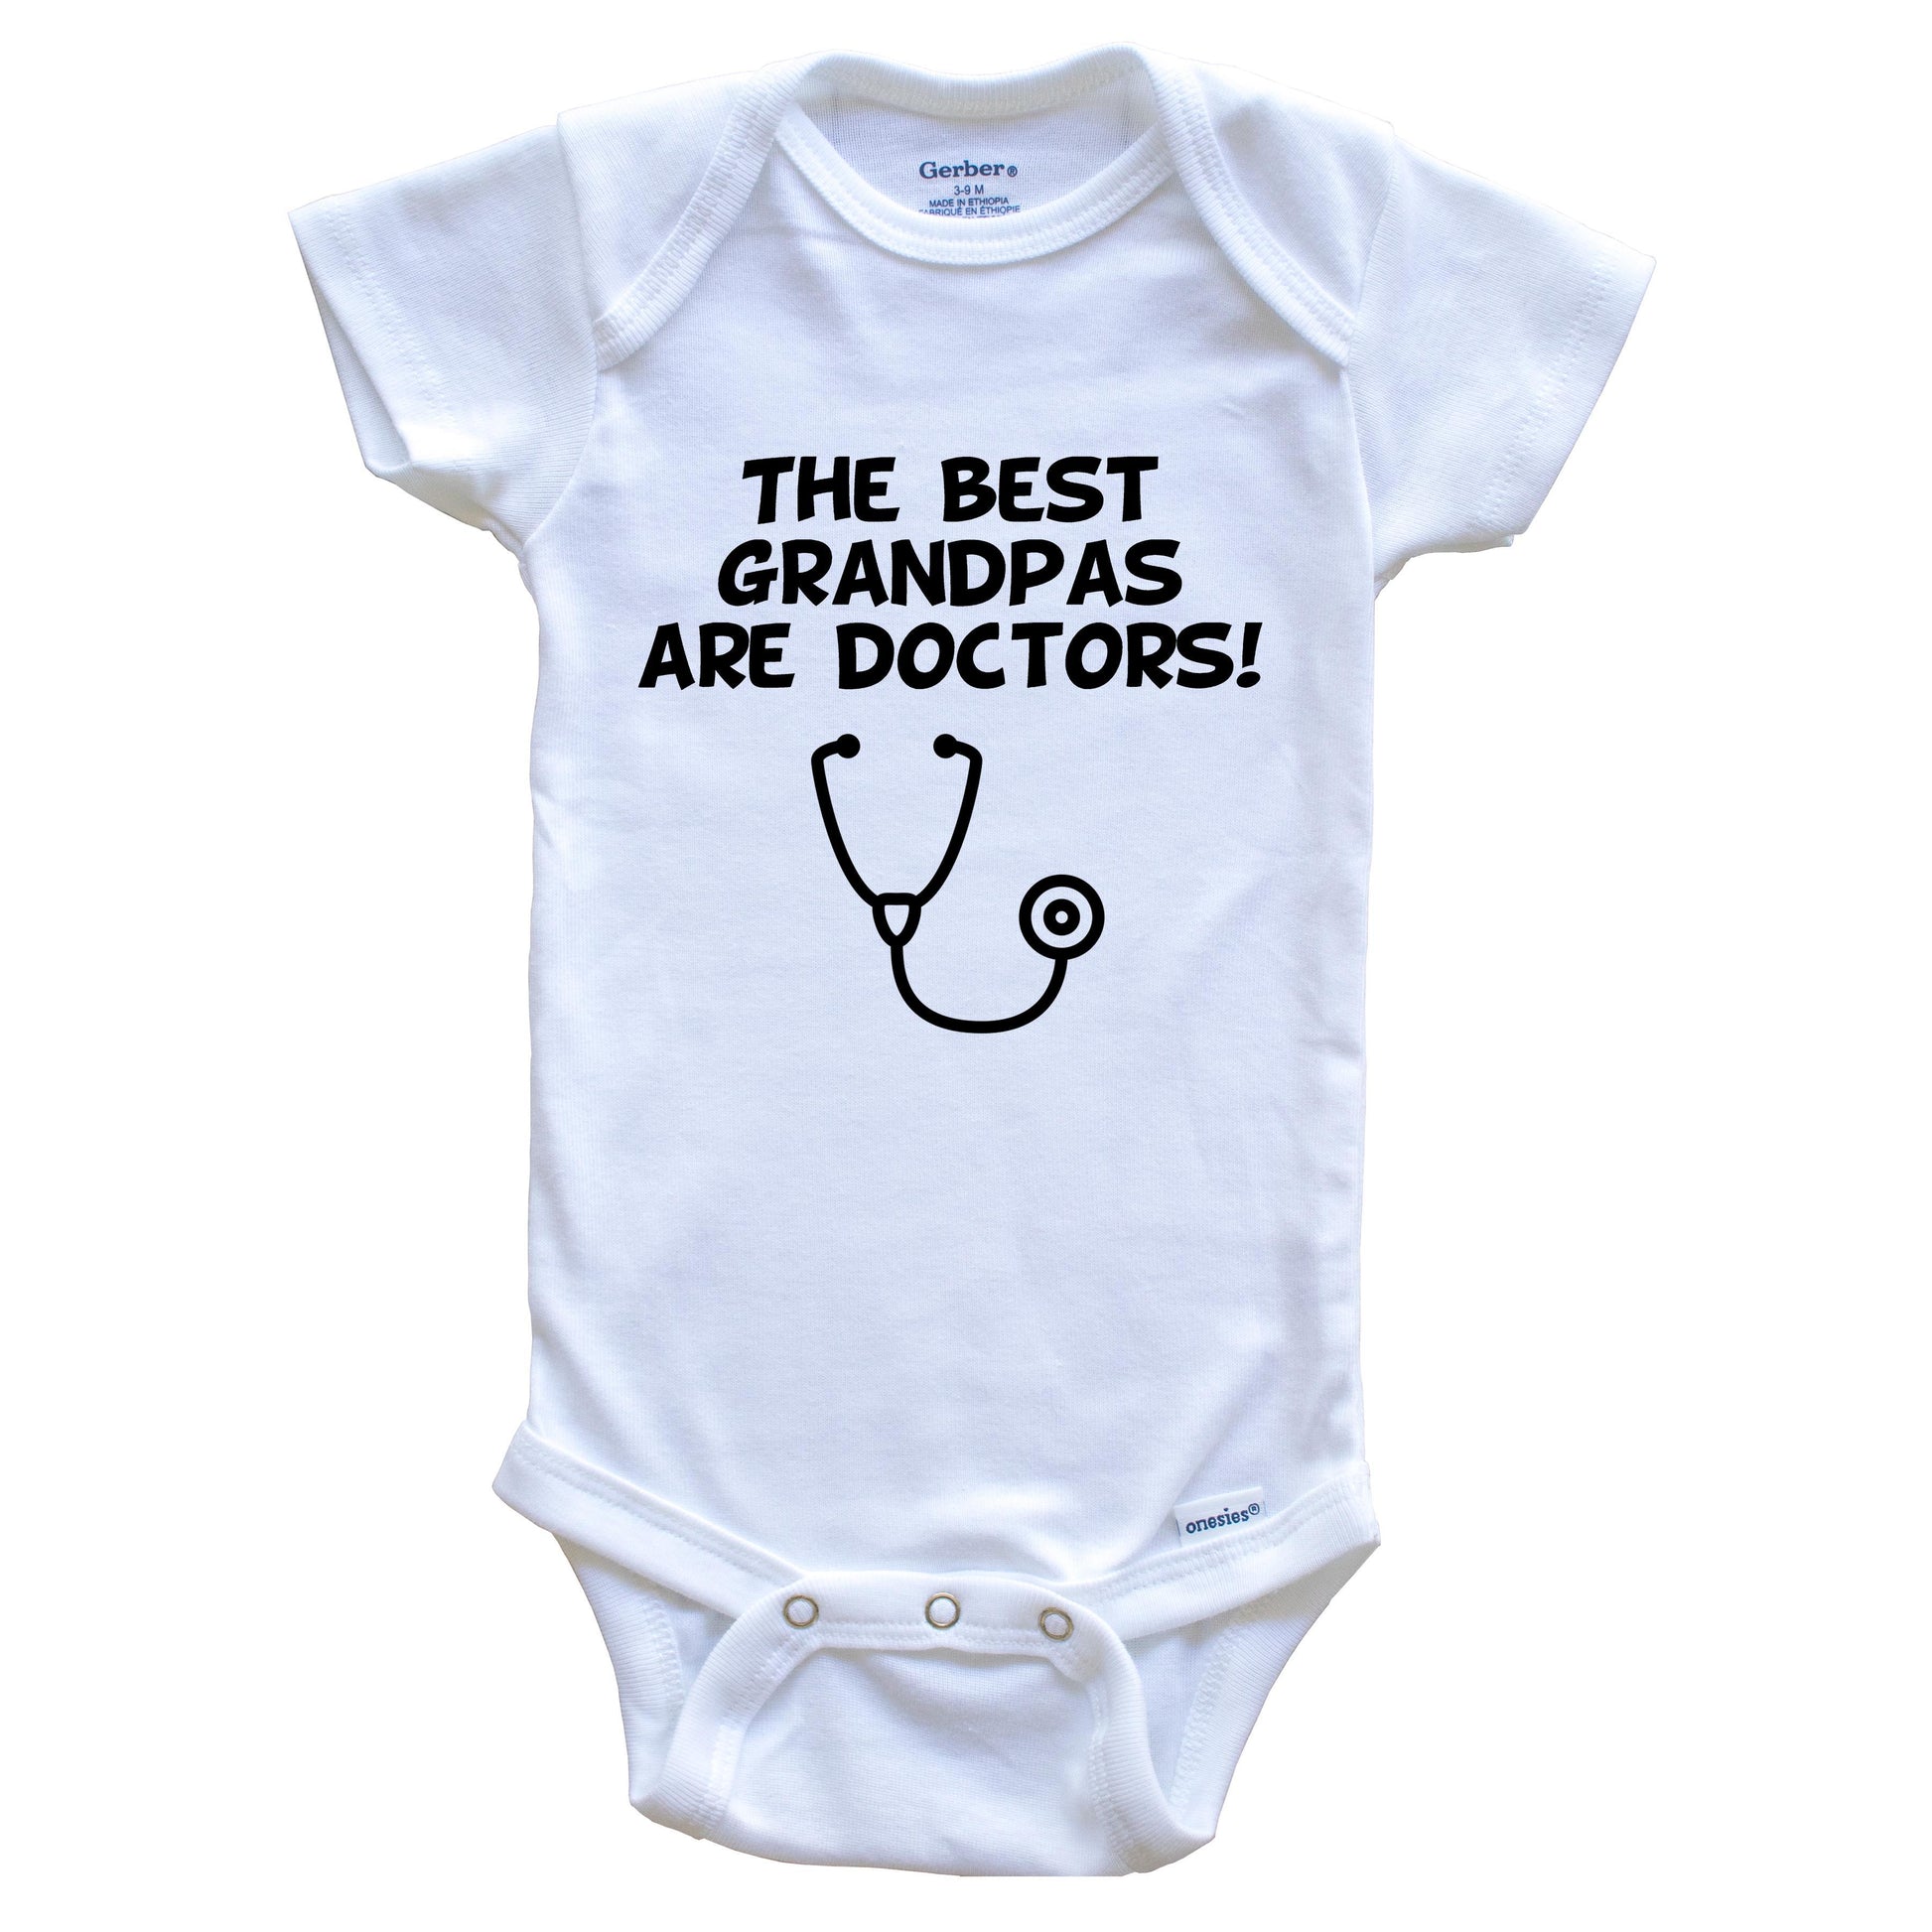 The Best Grandpas Are Doctors Funny Grandchild Baby Onesie